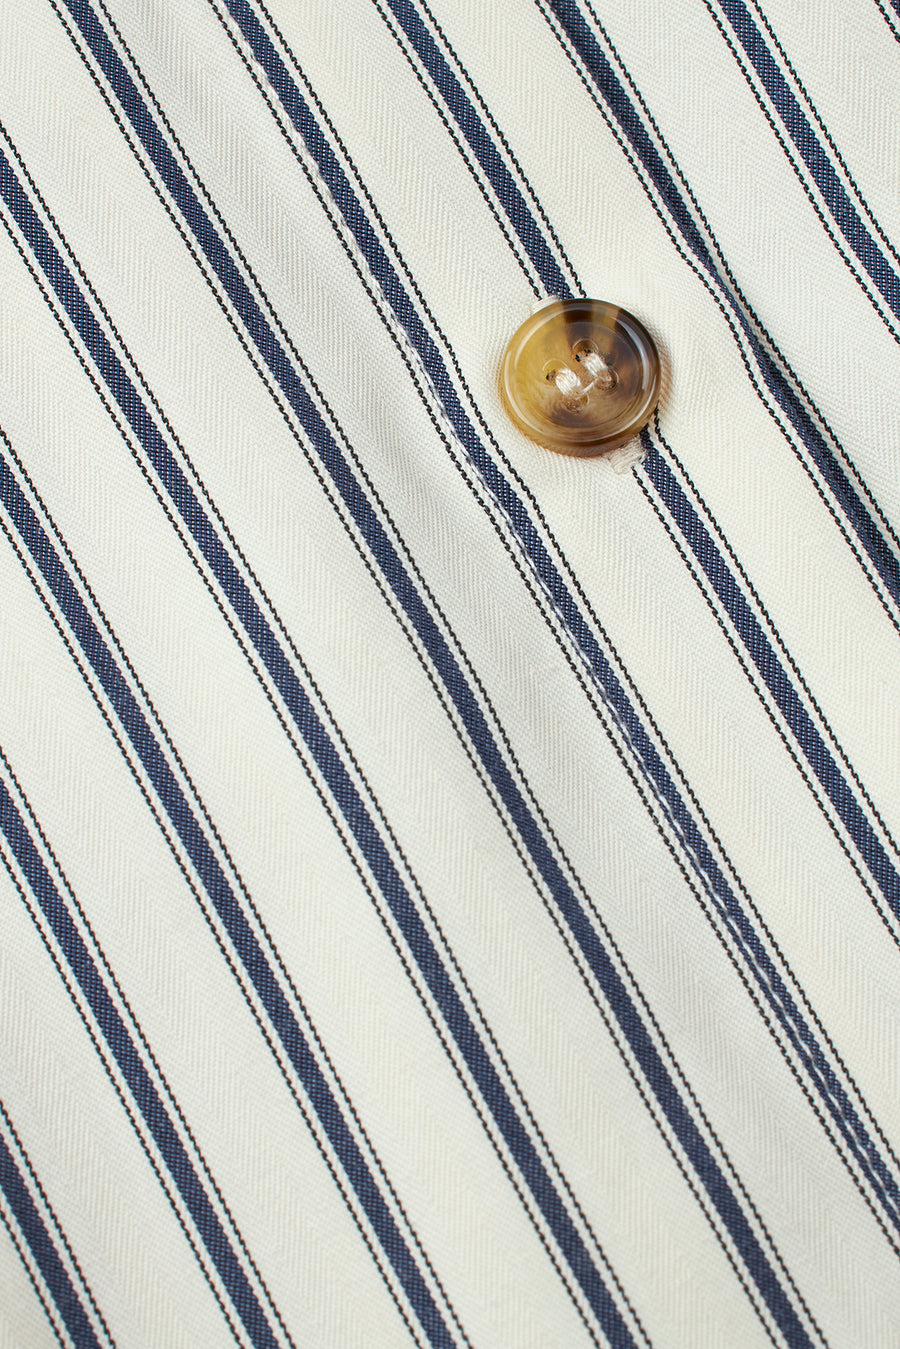 Lollys Laundry - MumbaLL Shirt - Stripe